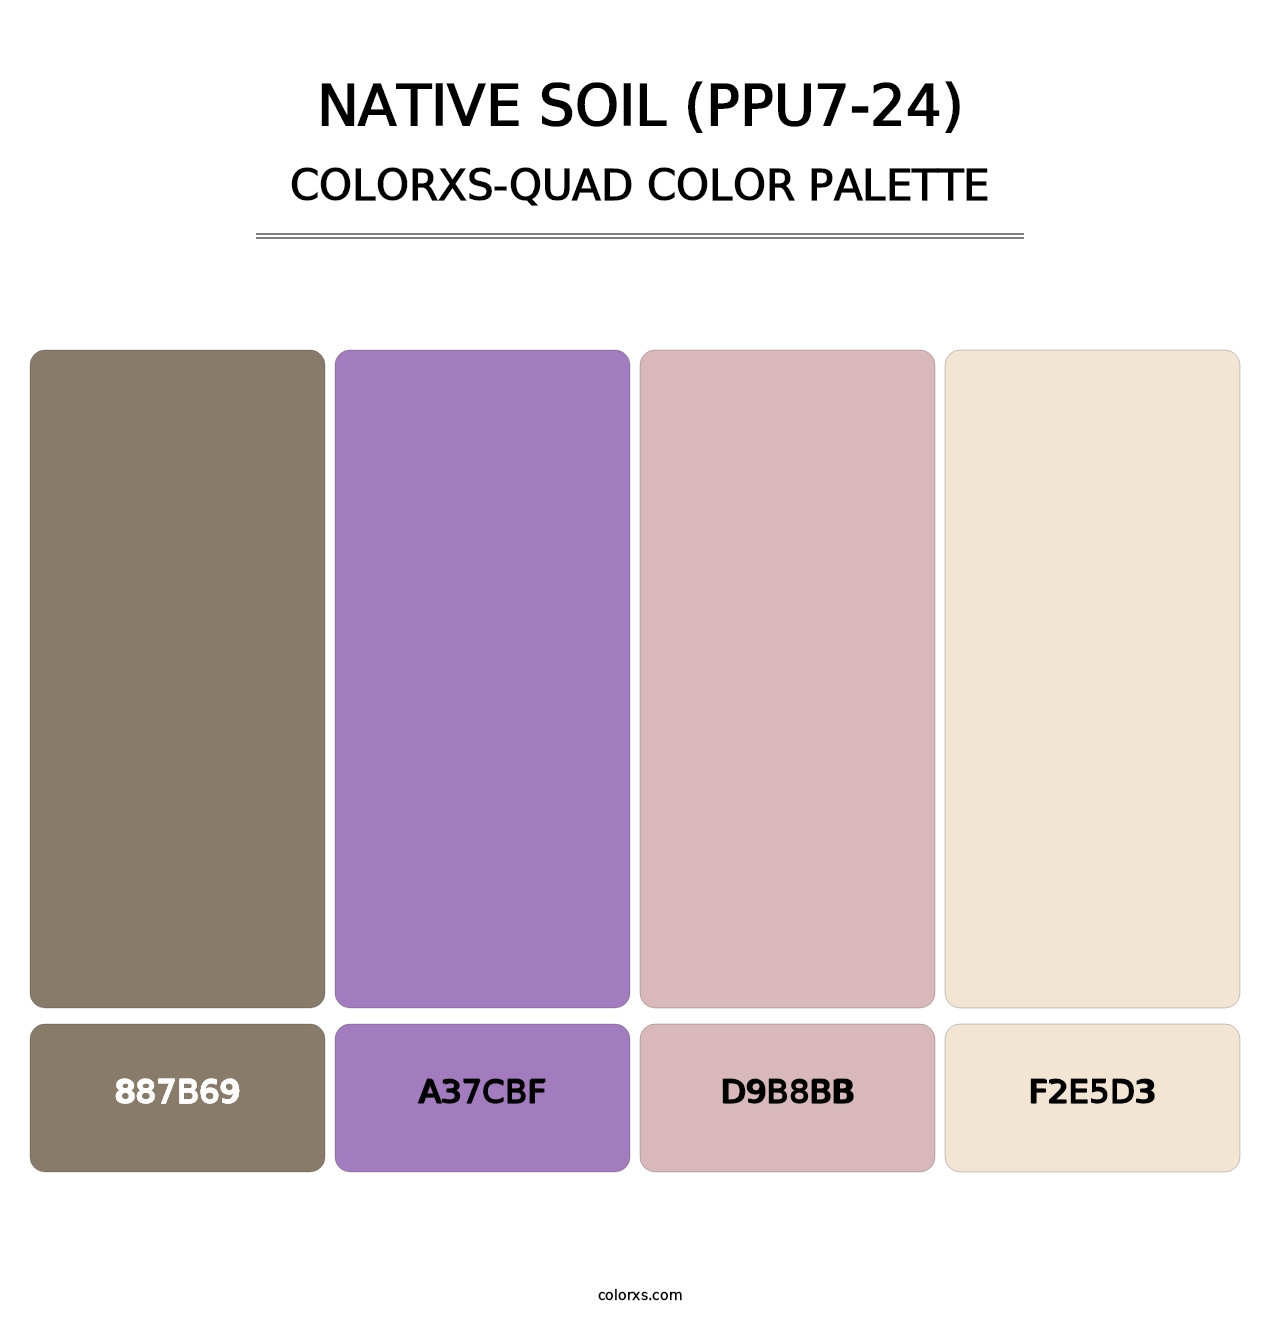 Native Soil (PPU7-24) - Colorxs Quad Palette